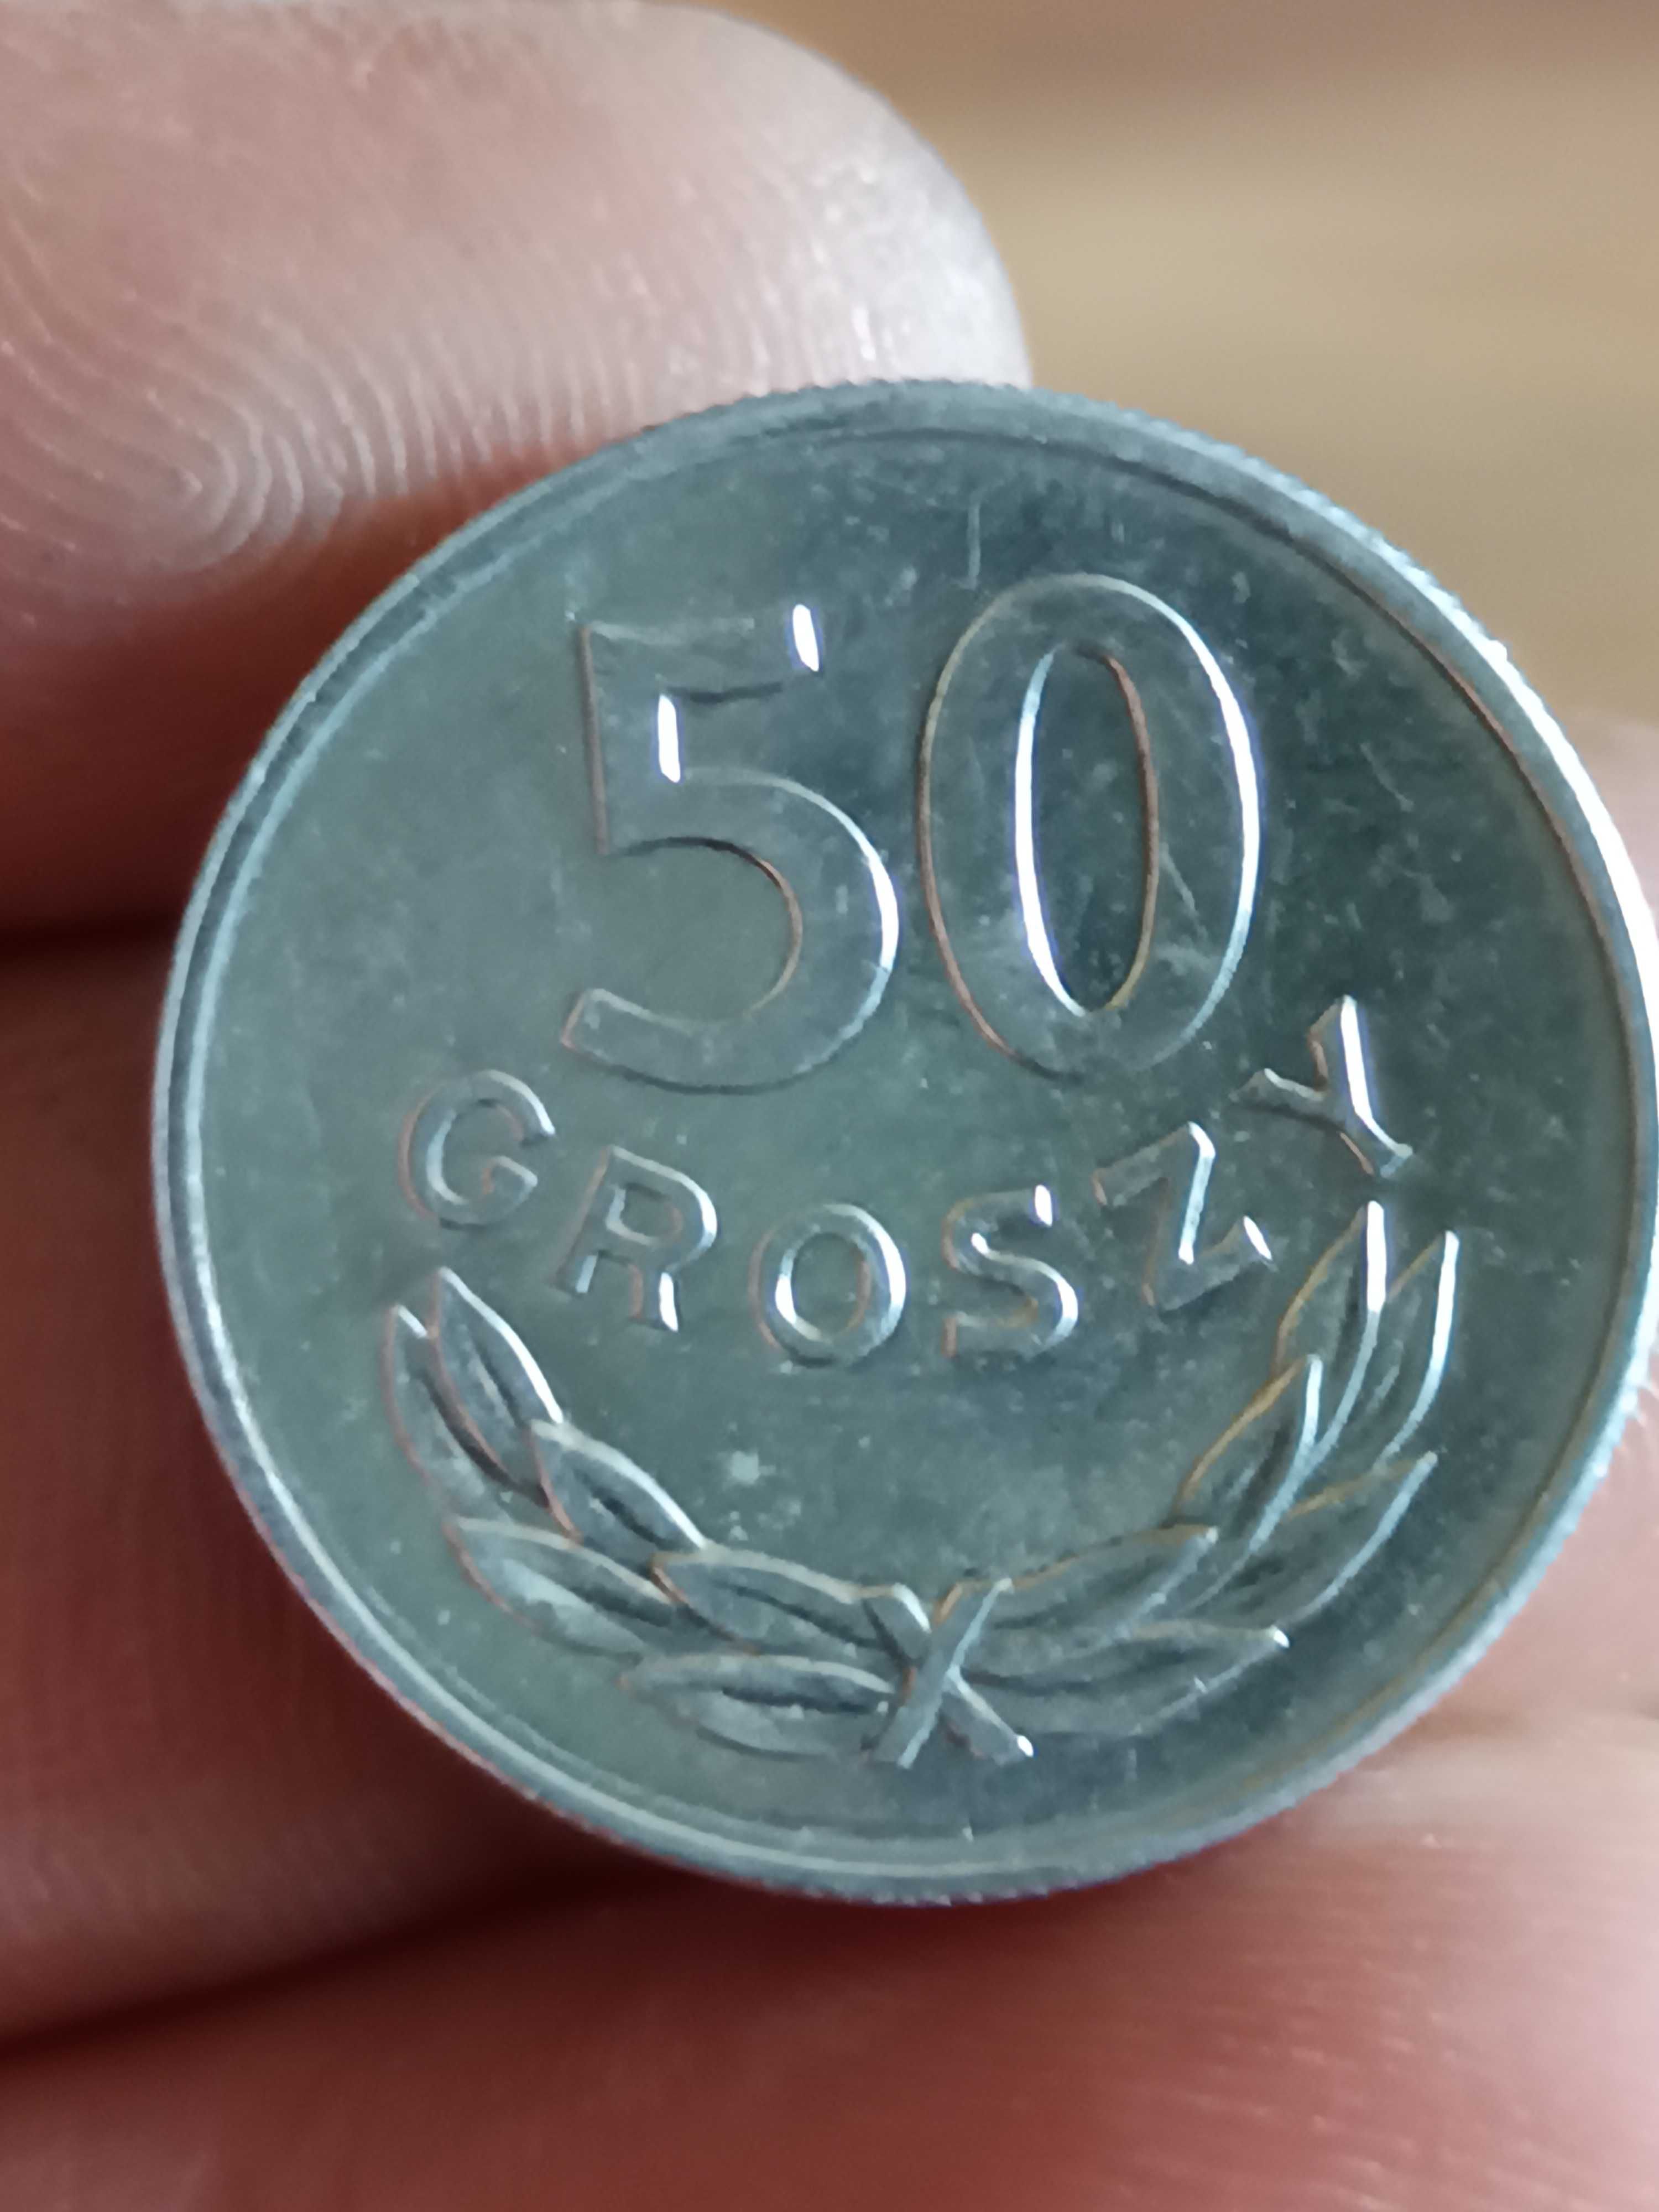 Druga moneta 50 groszy 1986 rok